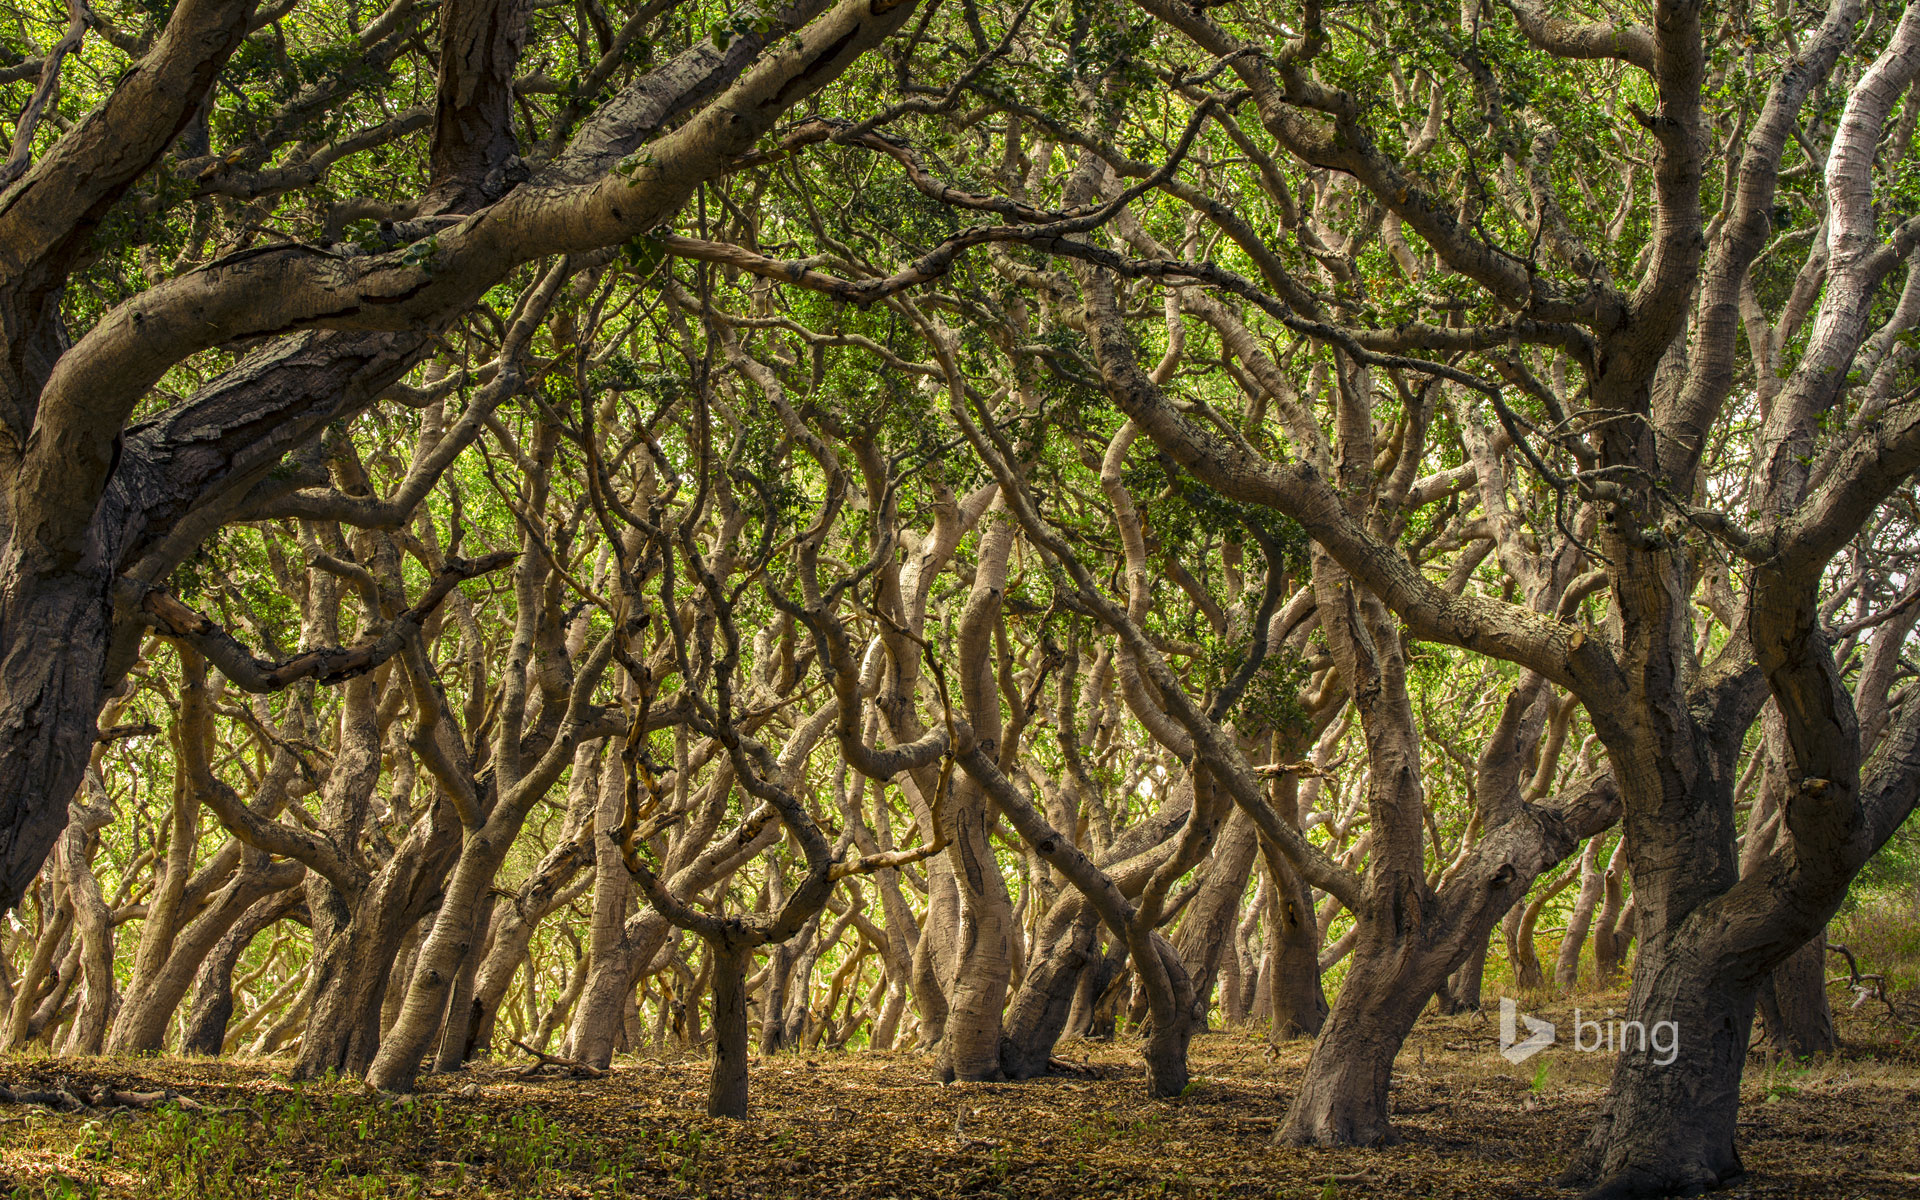 Oak trees in Palo Corona Regional Park, Carmel Valley, California